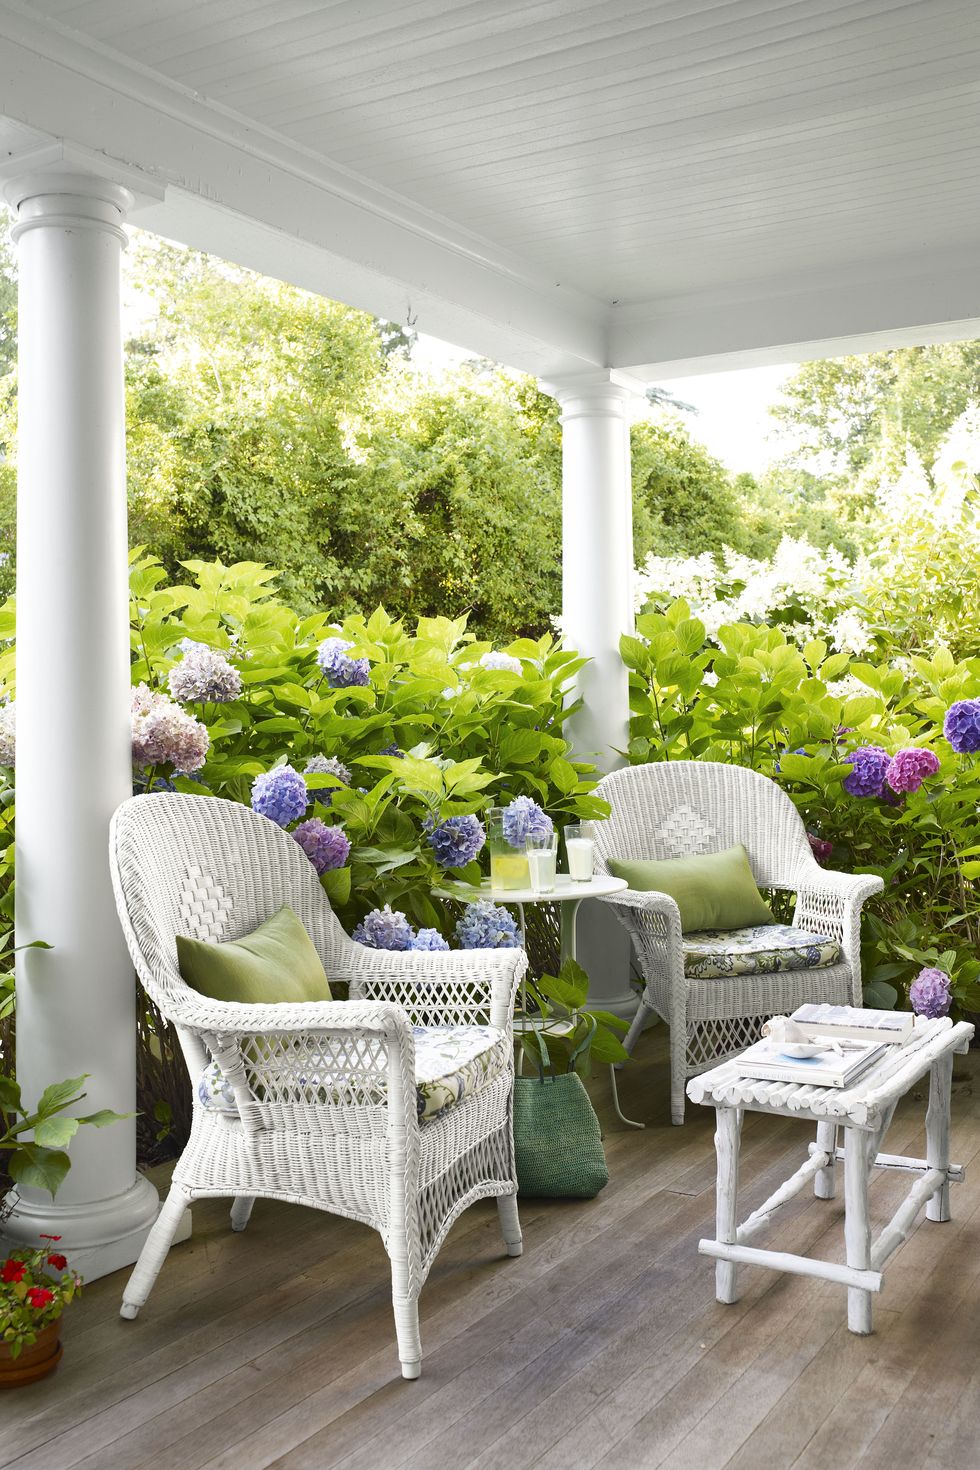 Plant, Furniture, Outdoor furniture, Garden, Flowerpot, Chair, Outdoor table, Shade, Lavender, Hardwood, 